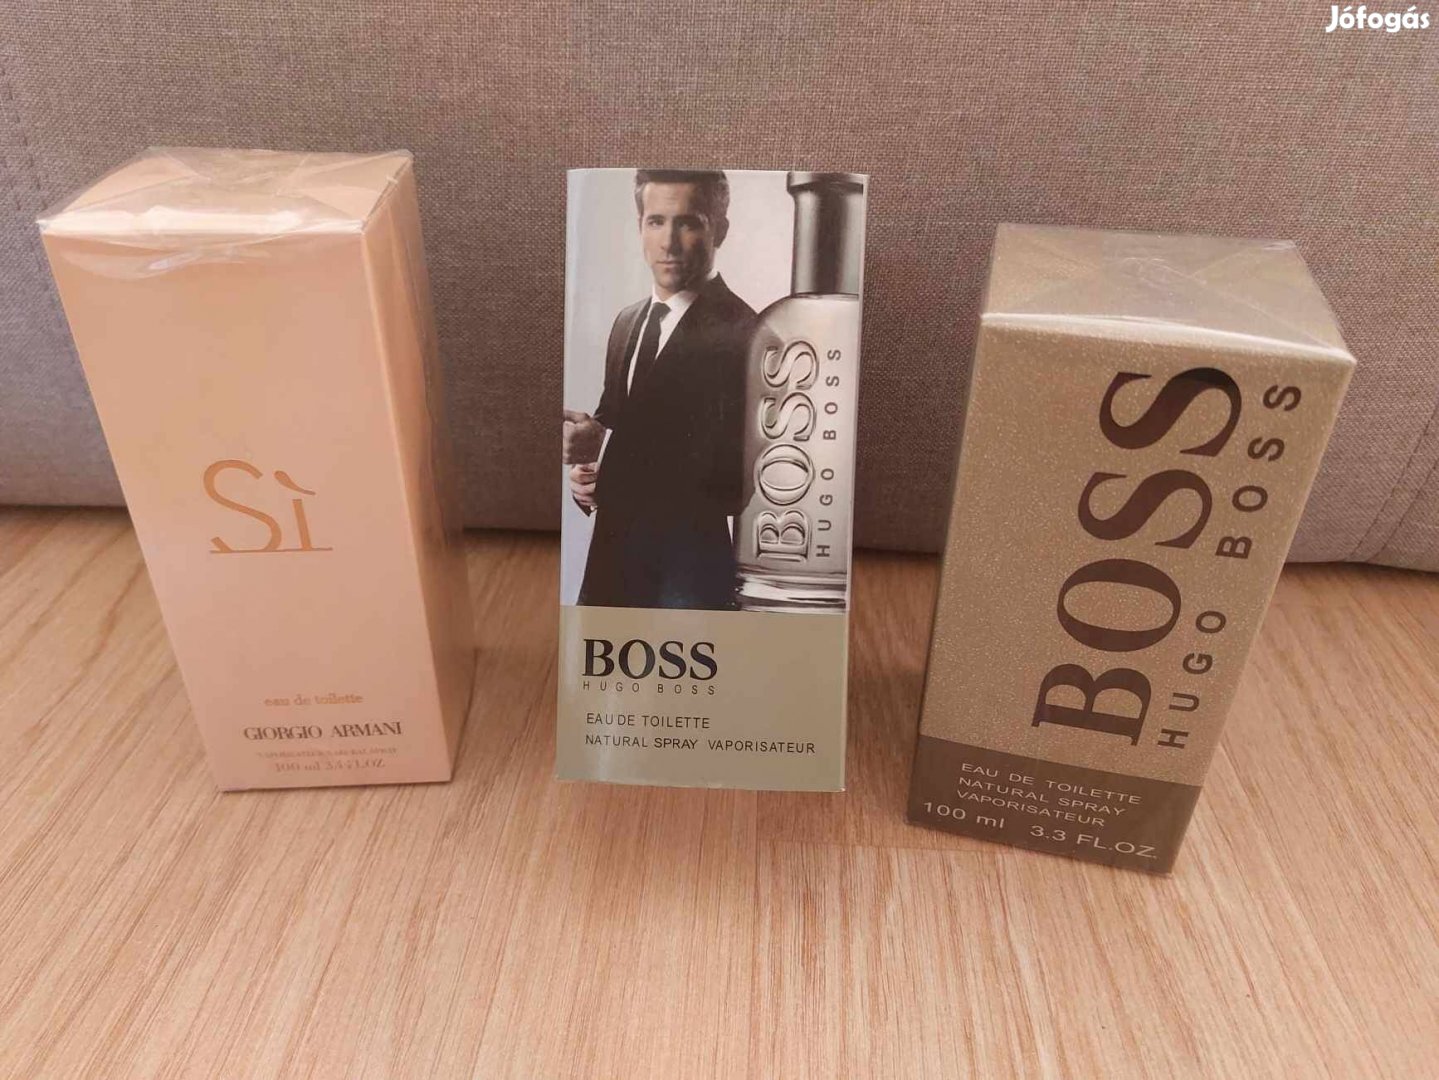 Giorgio Armani-Sí + Hugo Boss-BOSS parfümök eladók (Újak):